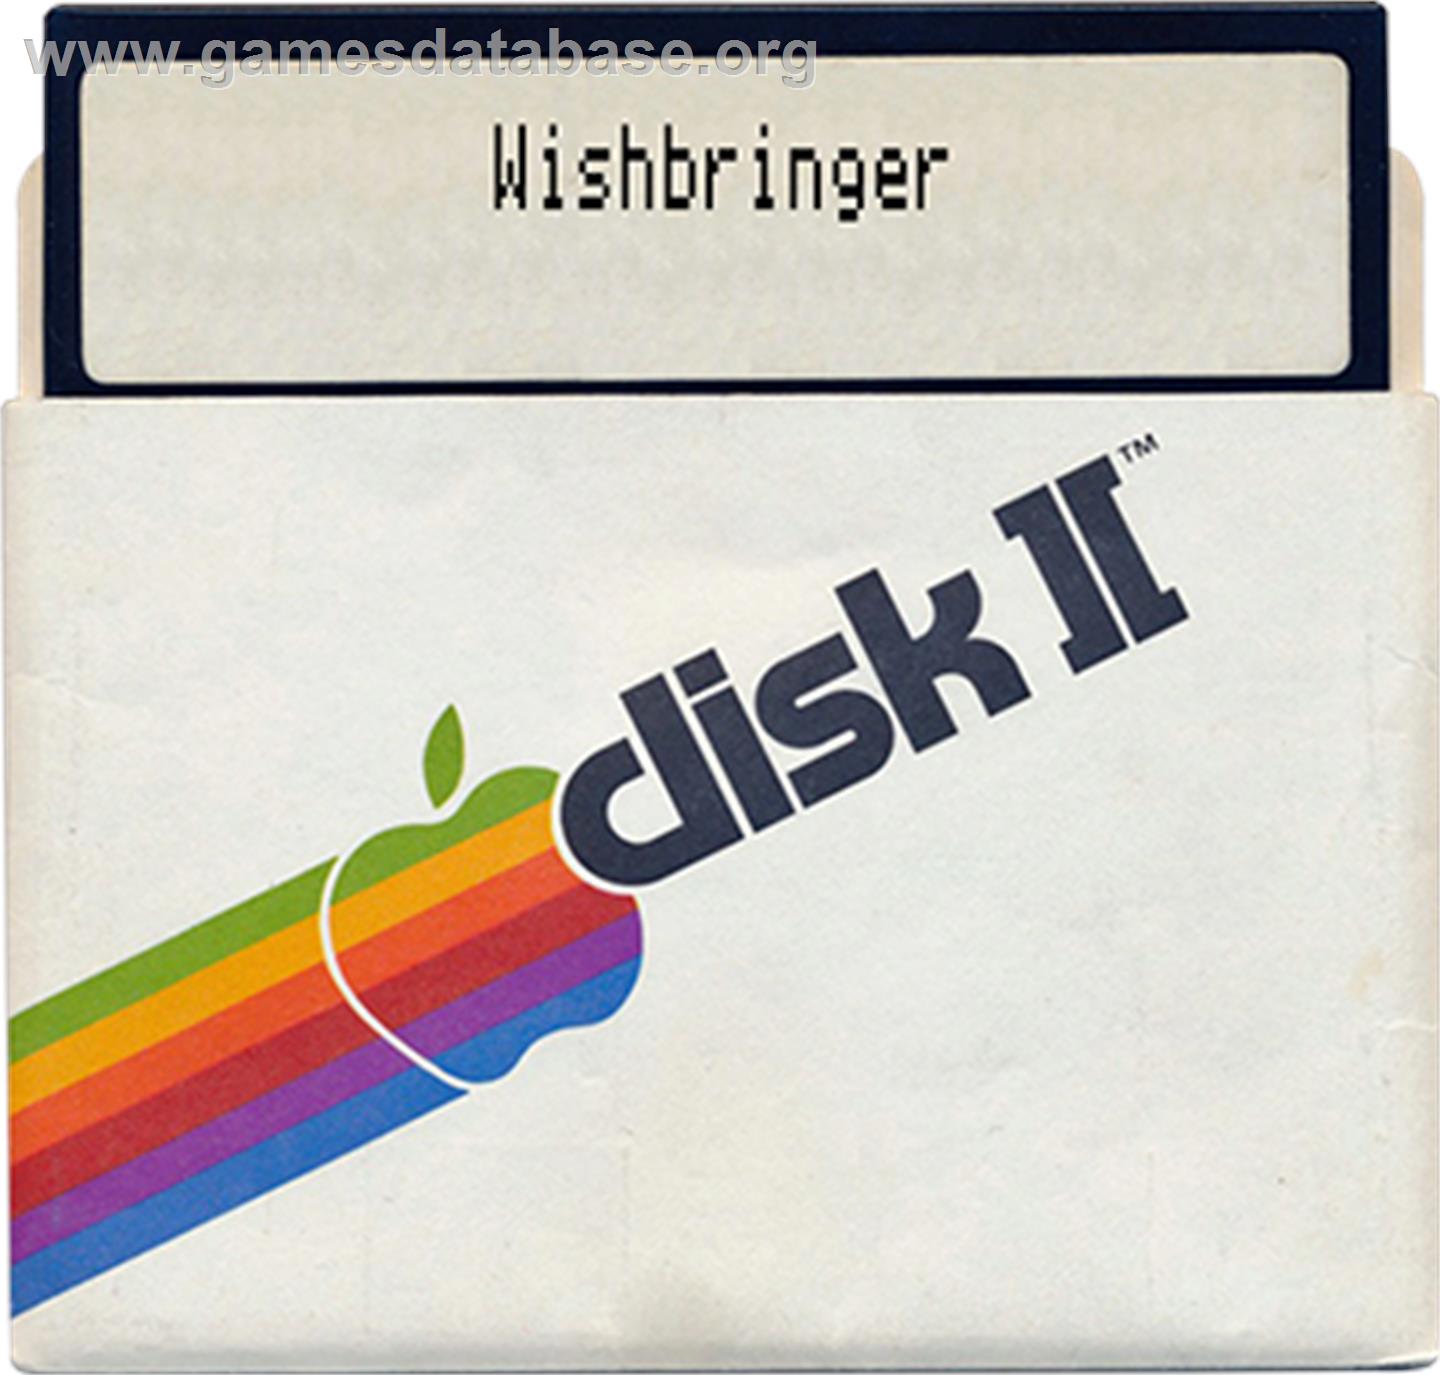 Wishbringer - Apple II - Artwork - Disc